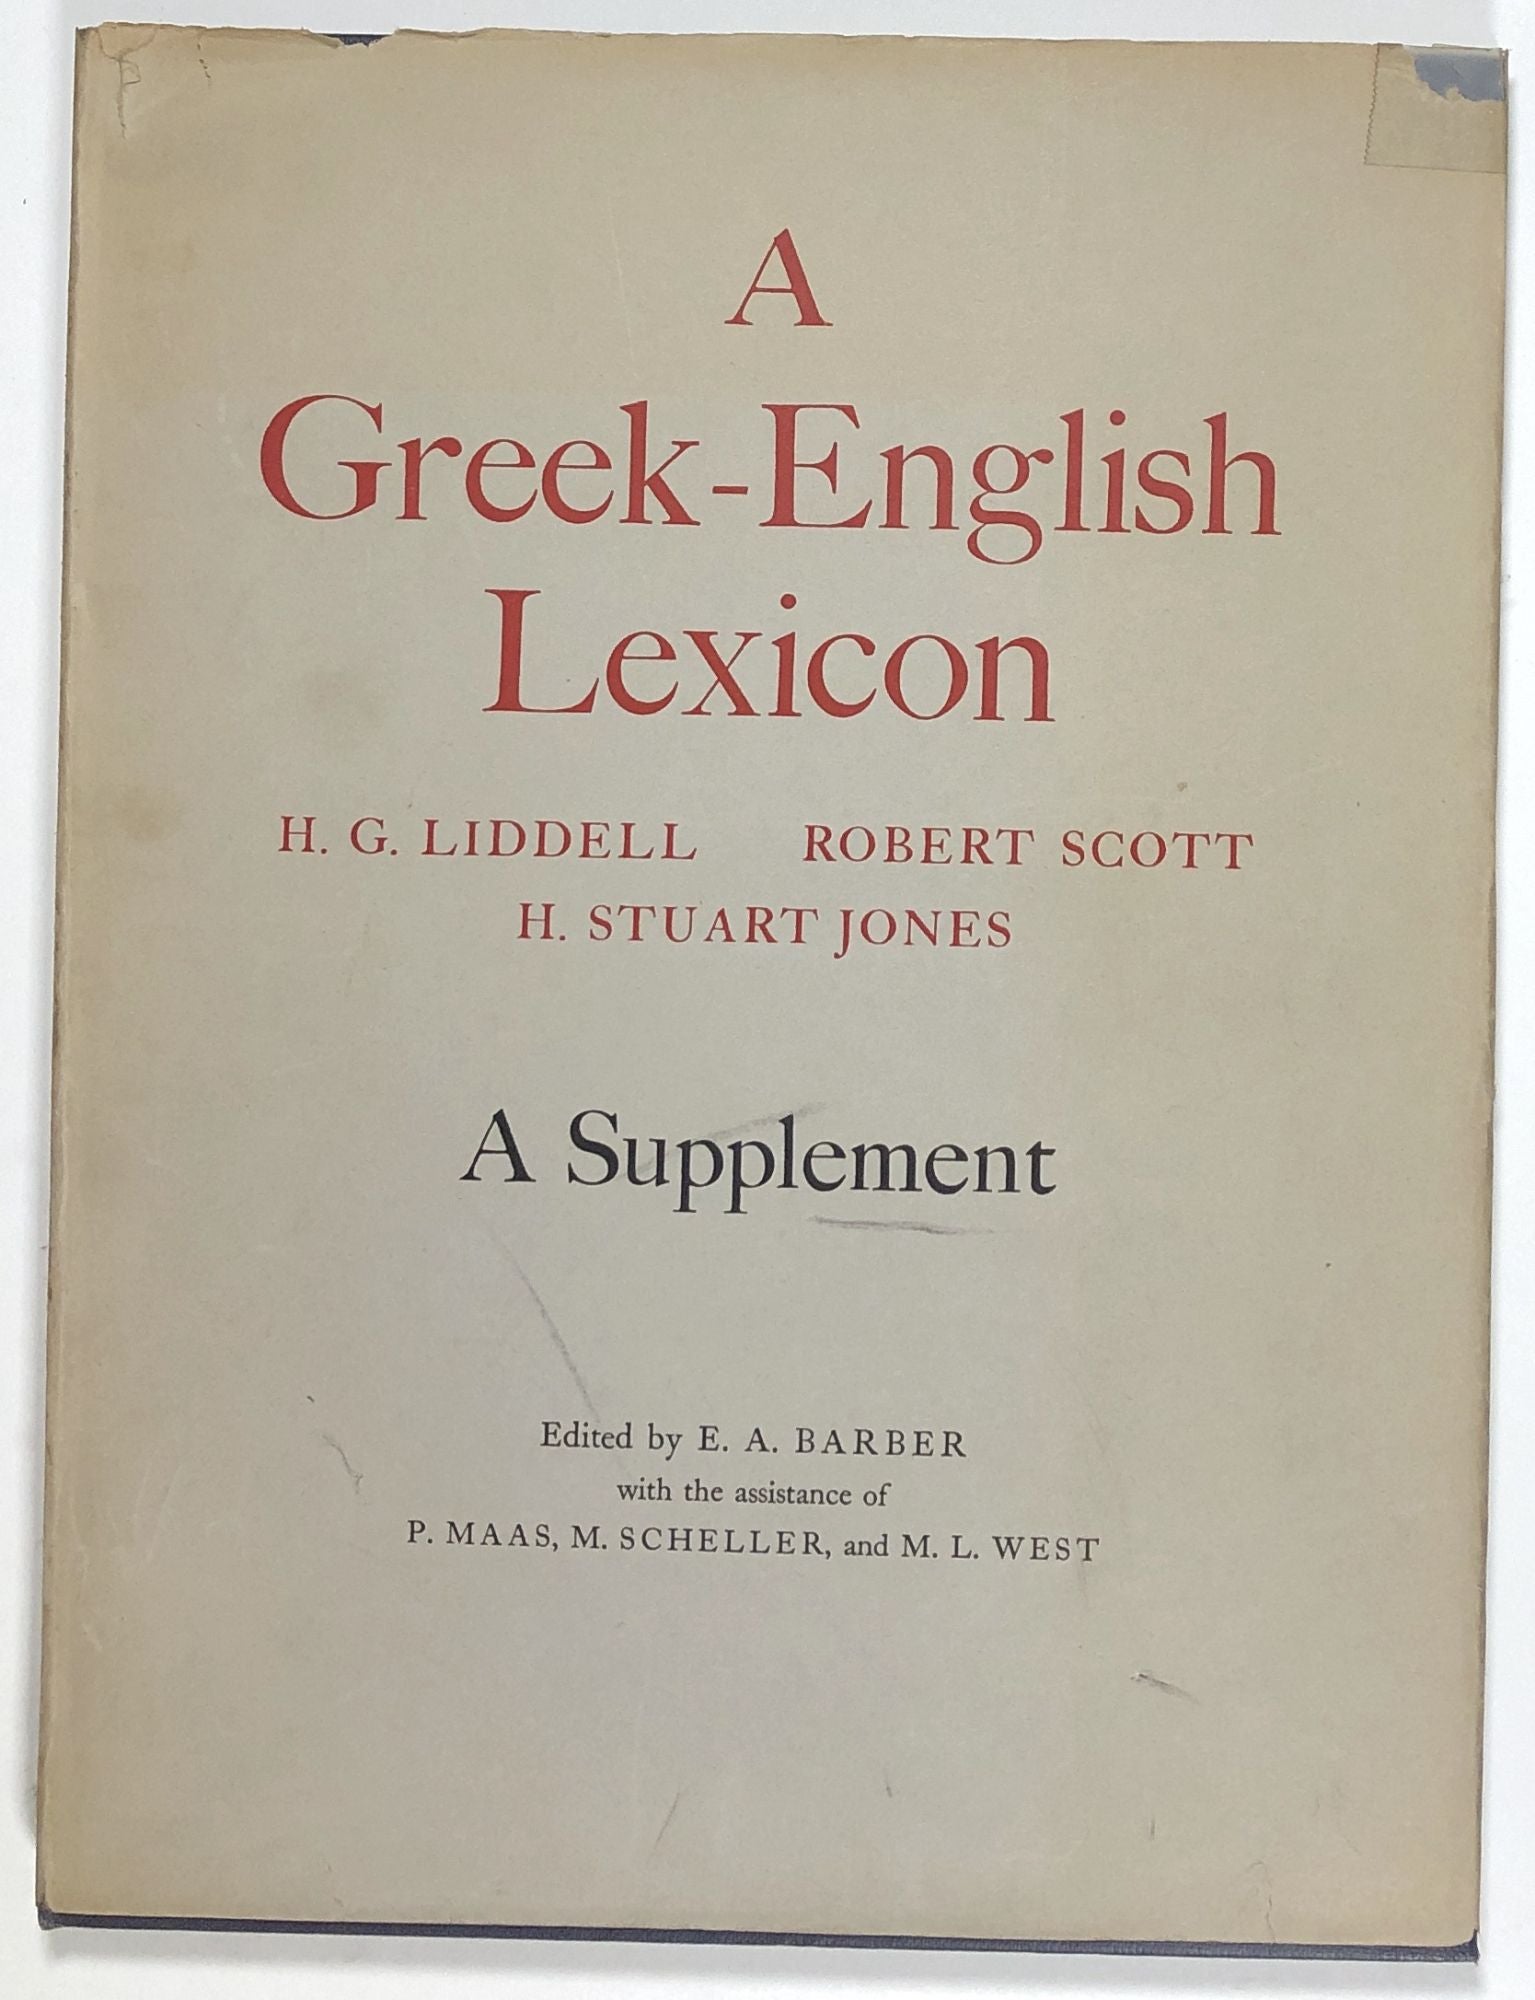 Greek-English Lexicon: A Supplement by H. G. Liddell, Robert Scott, H.  Stuart Jones on Common Crow Books